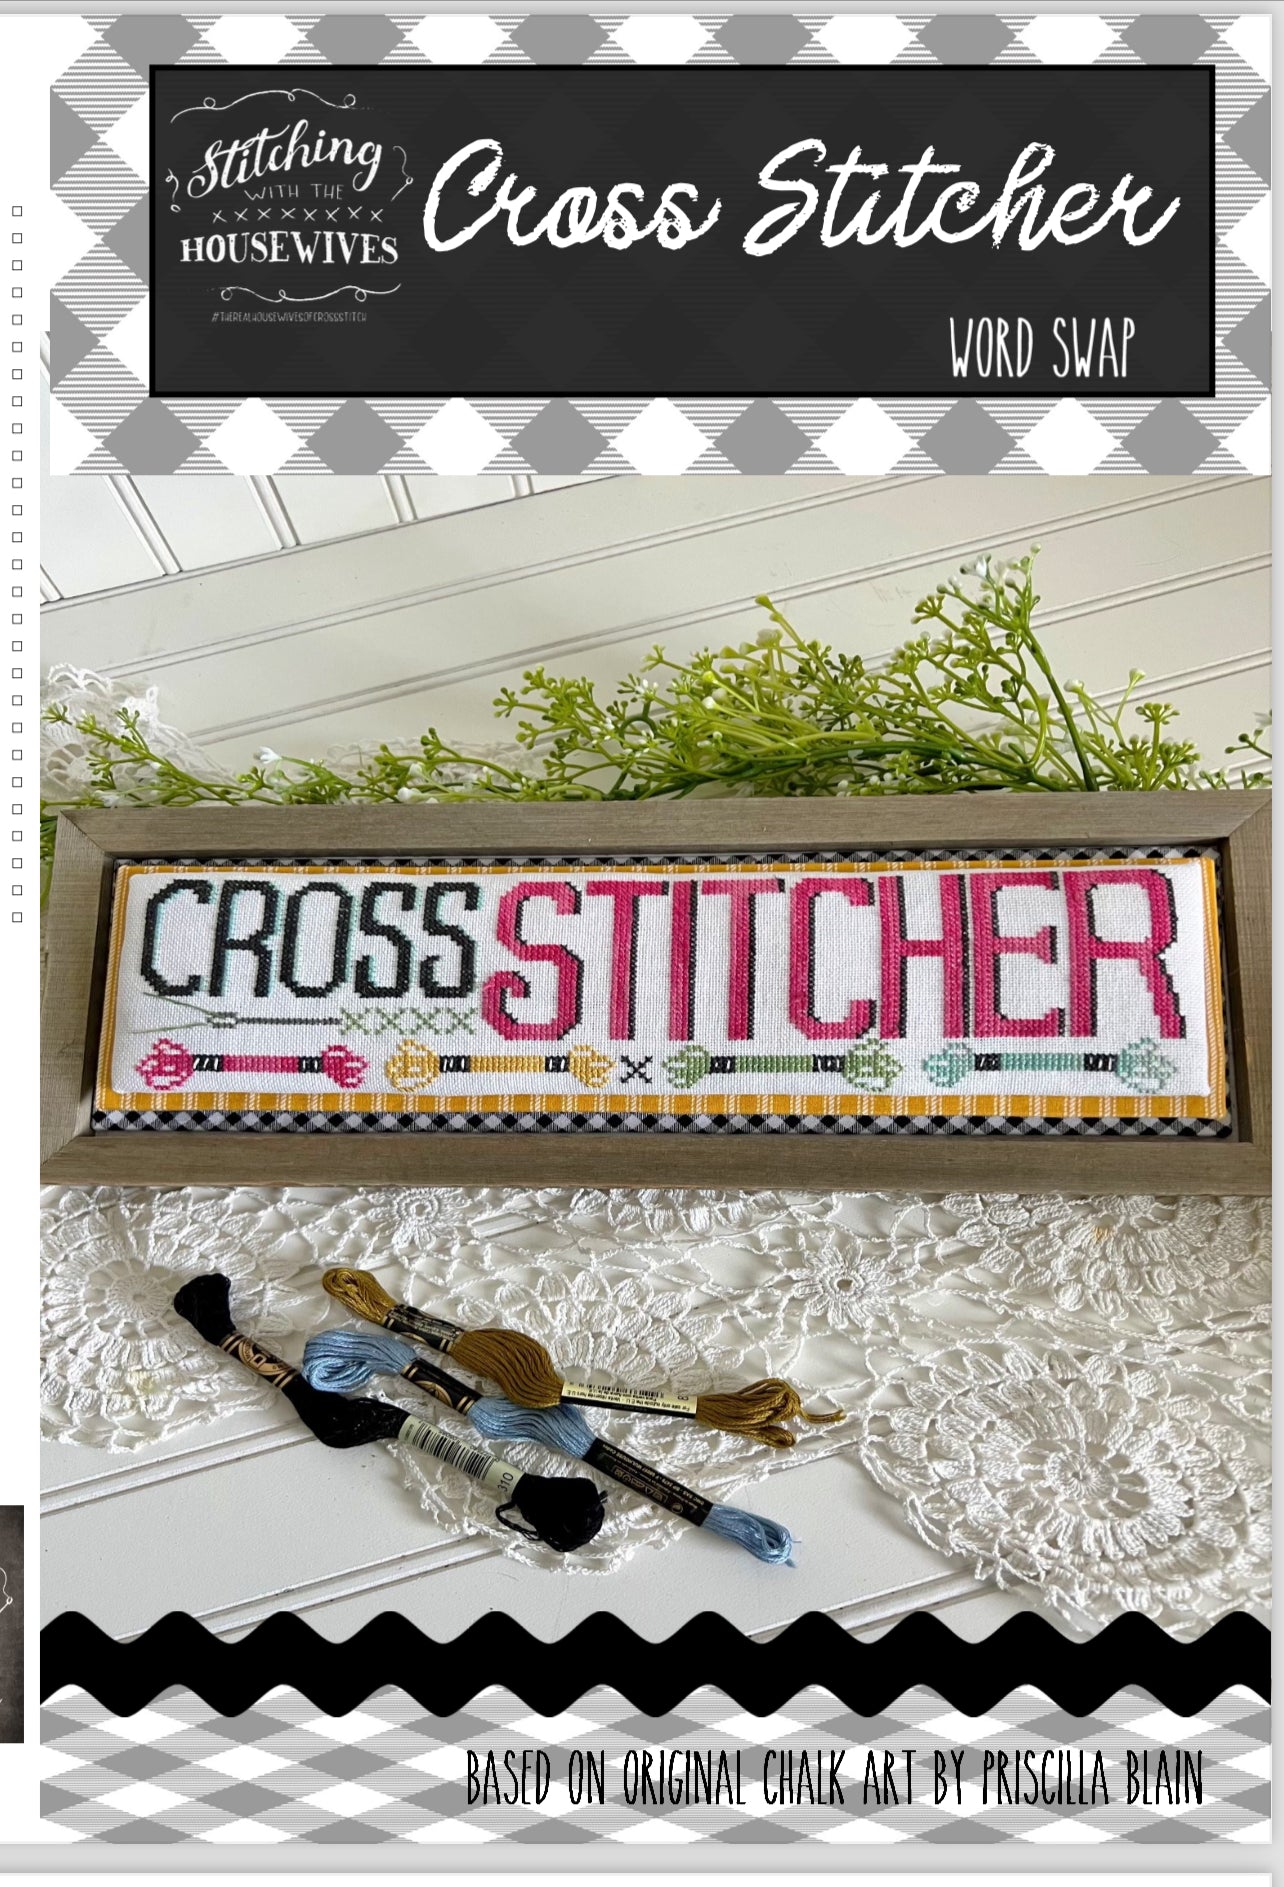 Cross Stitcher -Word Swap Series - Stitching with the Housewives - Cross Stitch Pattern, Needlecraft Patterns, The Crafty Grimalkin - A Cross Stitch Store